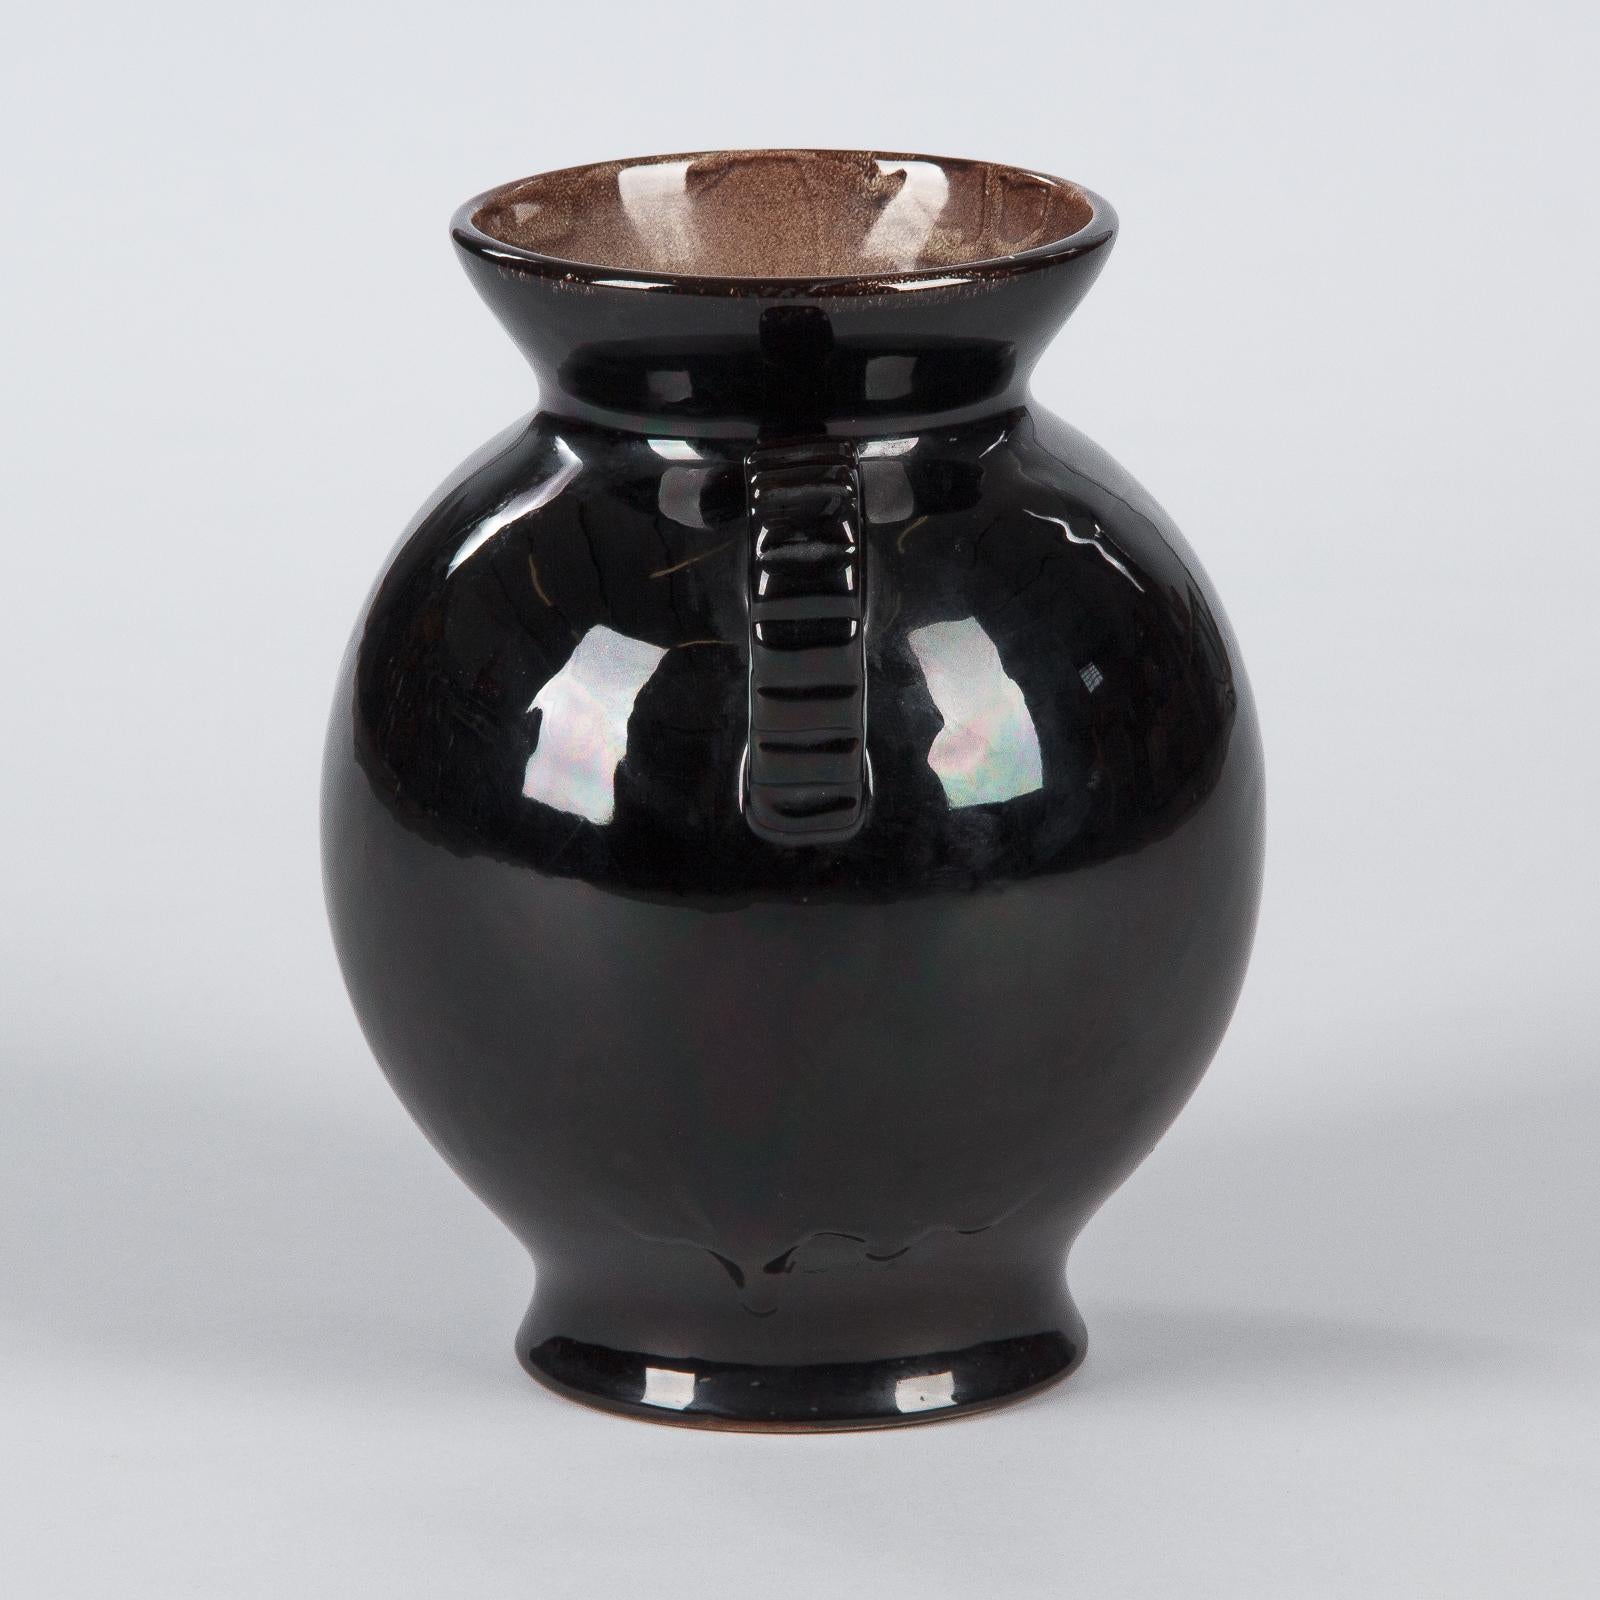 Mid-20th Century French Midcentury Quimper Ceramic Vase from Keraluc Pottery Studio, 1950s